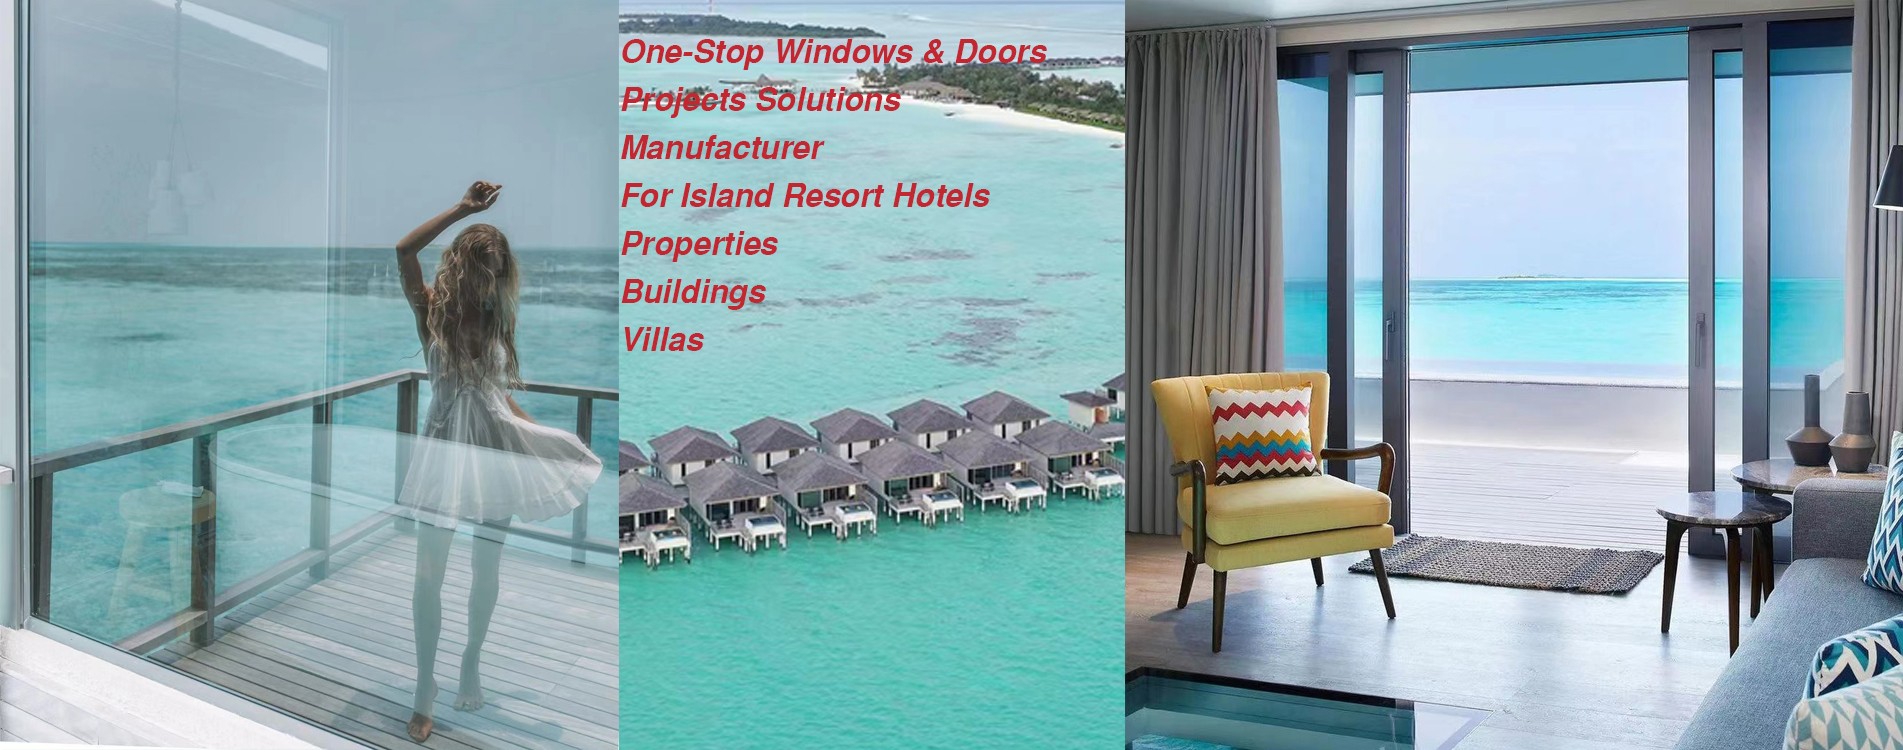 Aluminum Windows Doors For Island Resort Hotels Professional Manufacturer